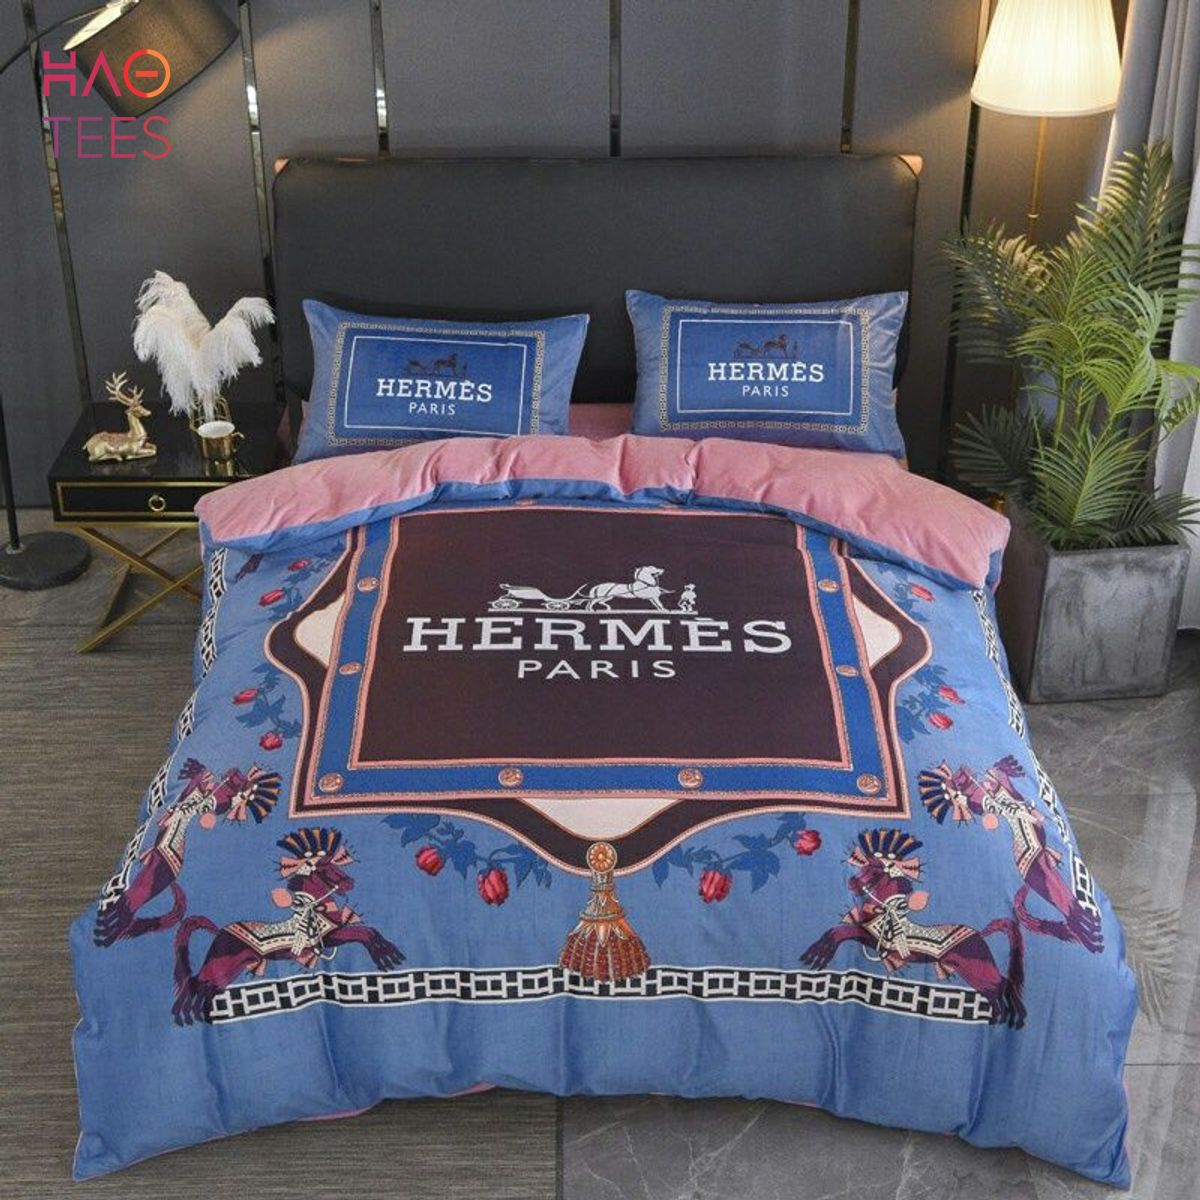 Hermes Paris Luxury Brand Bedding Sets And Bedroom Sets